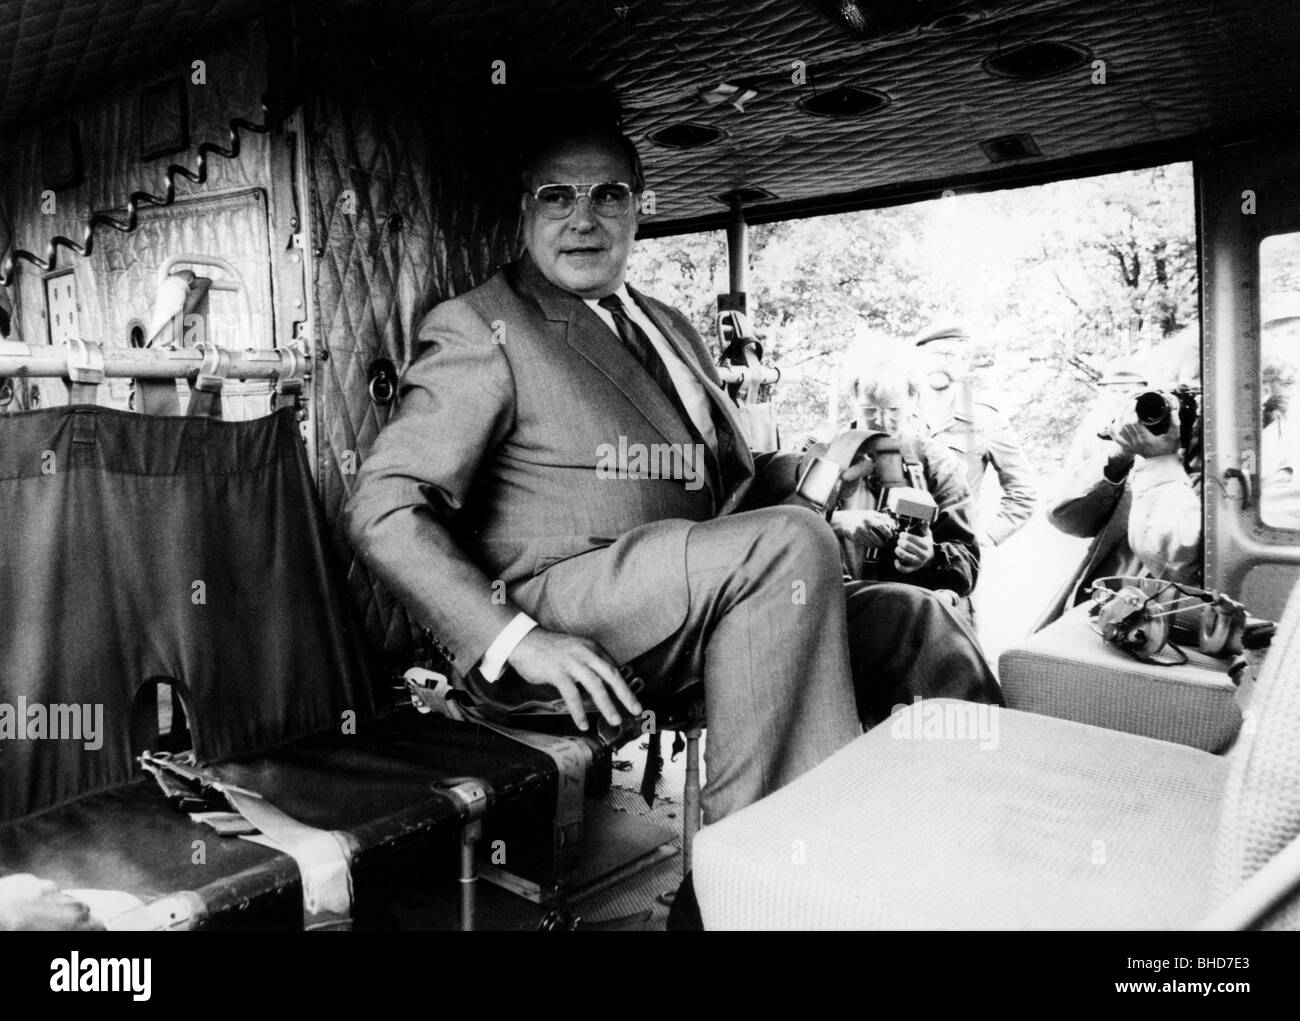 Kohl, Helmut, * 3.4.1930, politico tedesco (CDU), cancelliere federale 4.10.1982-26.10.1998, in elicottero Bell UH-1 delle Forze armate tedesche, 1980s, Foto Stock